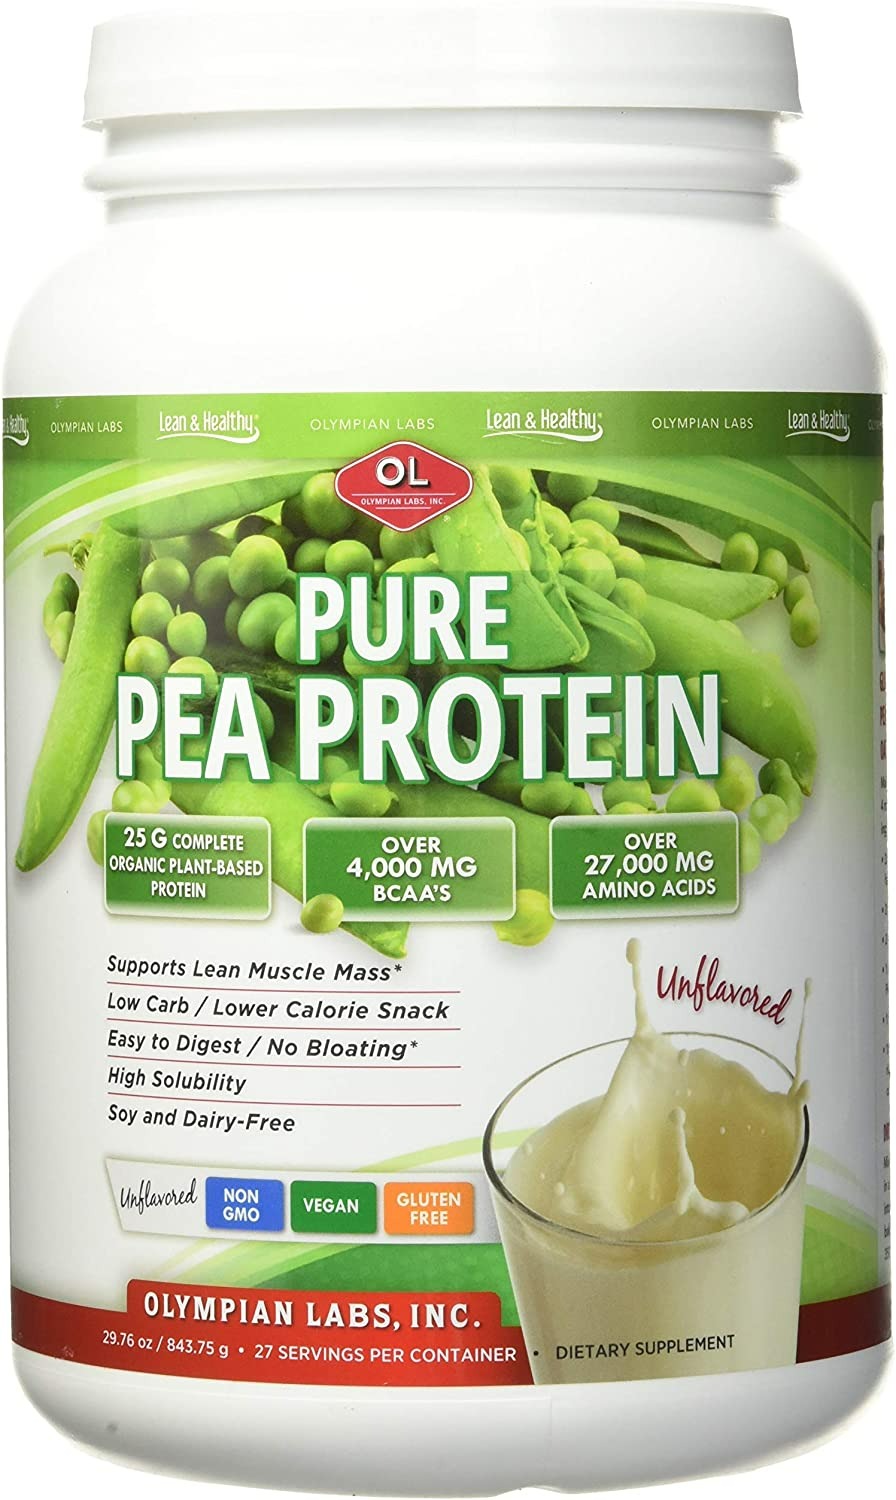 Olympian Labs Plant Based Pea Protein Powder - 30 Oz